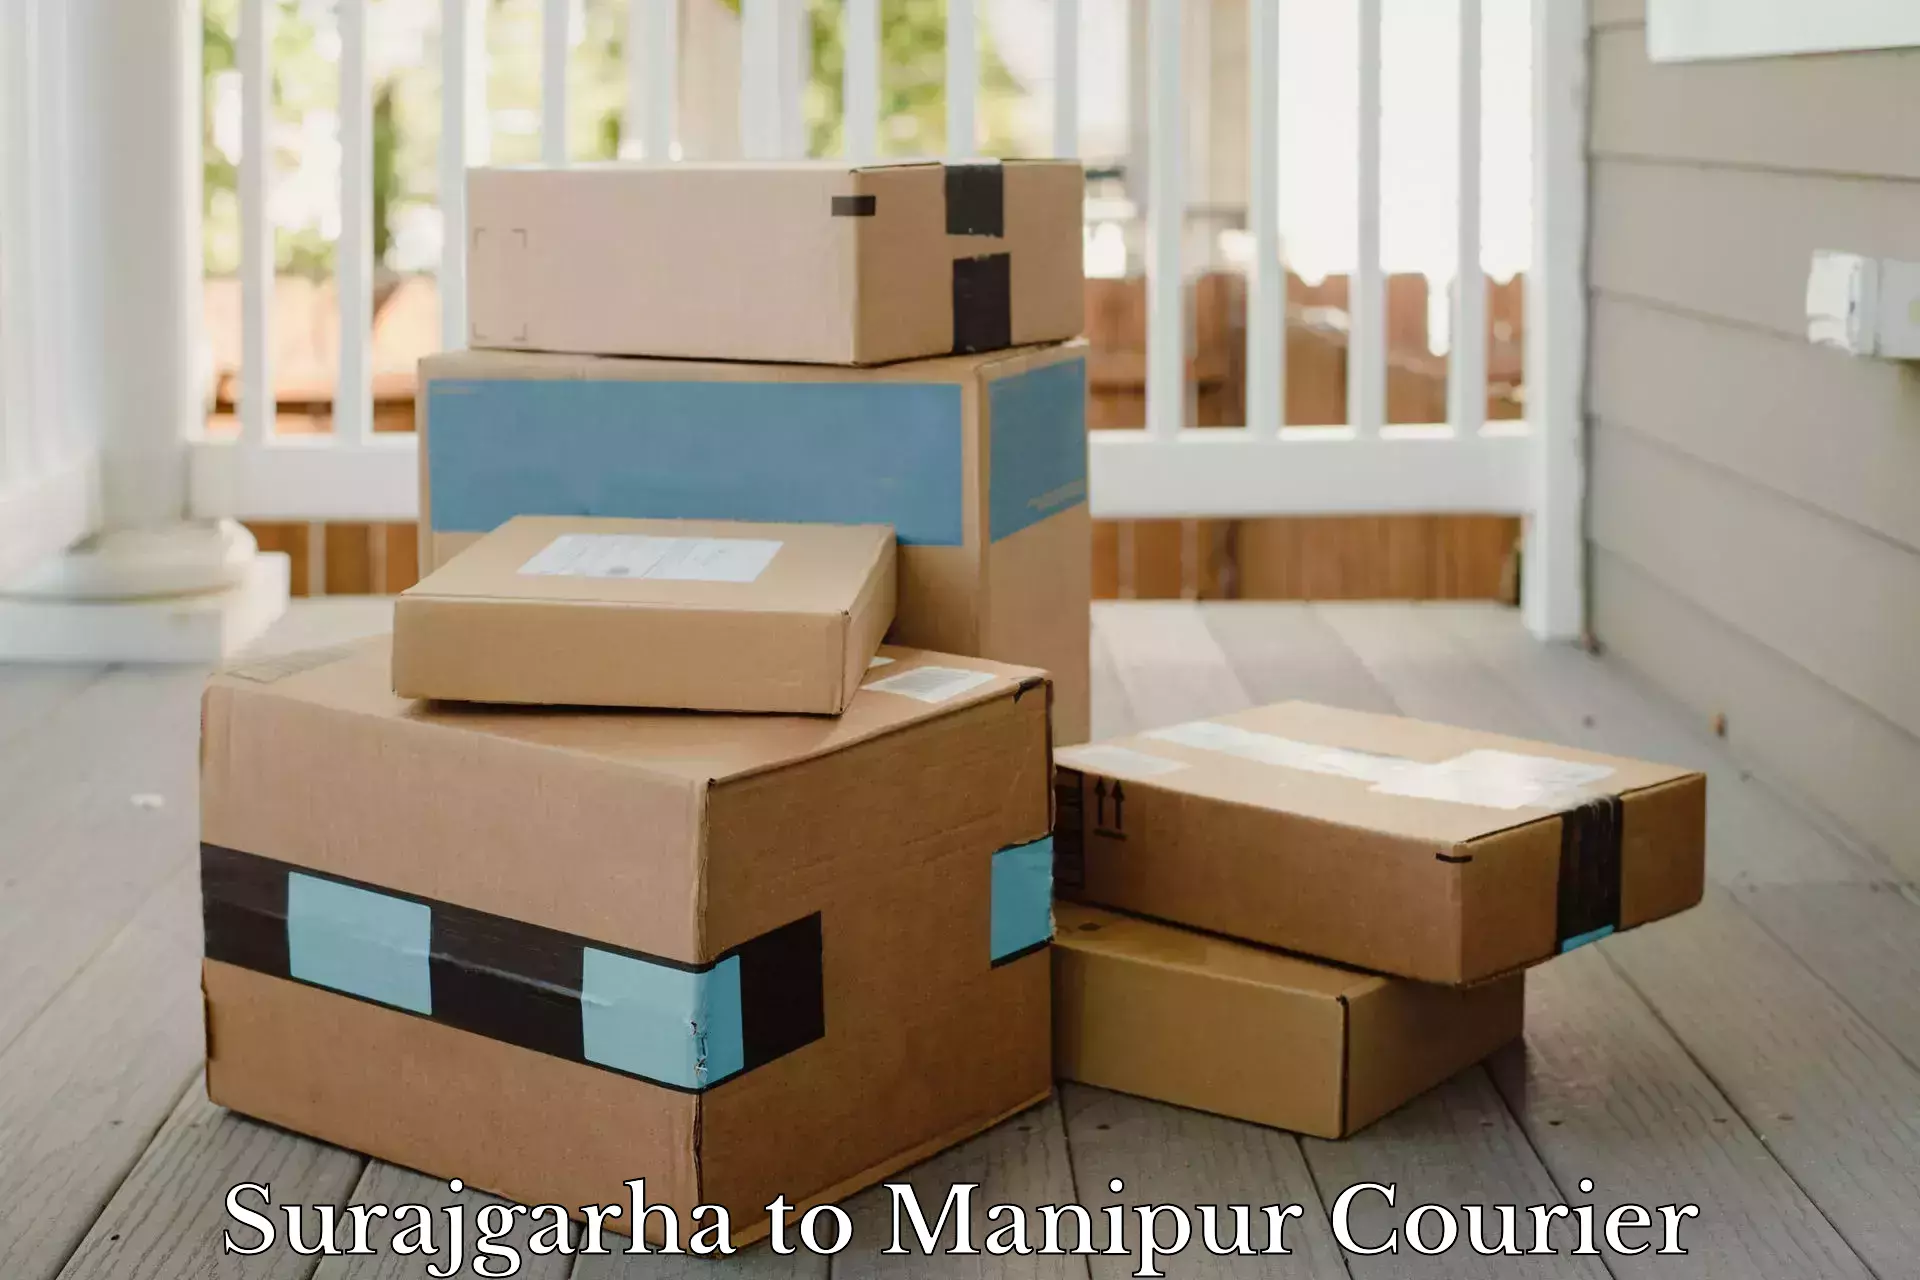 Courier service partnerships Surajgarha to Chandel